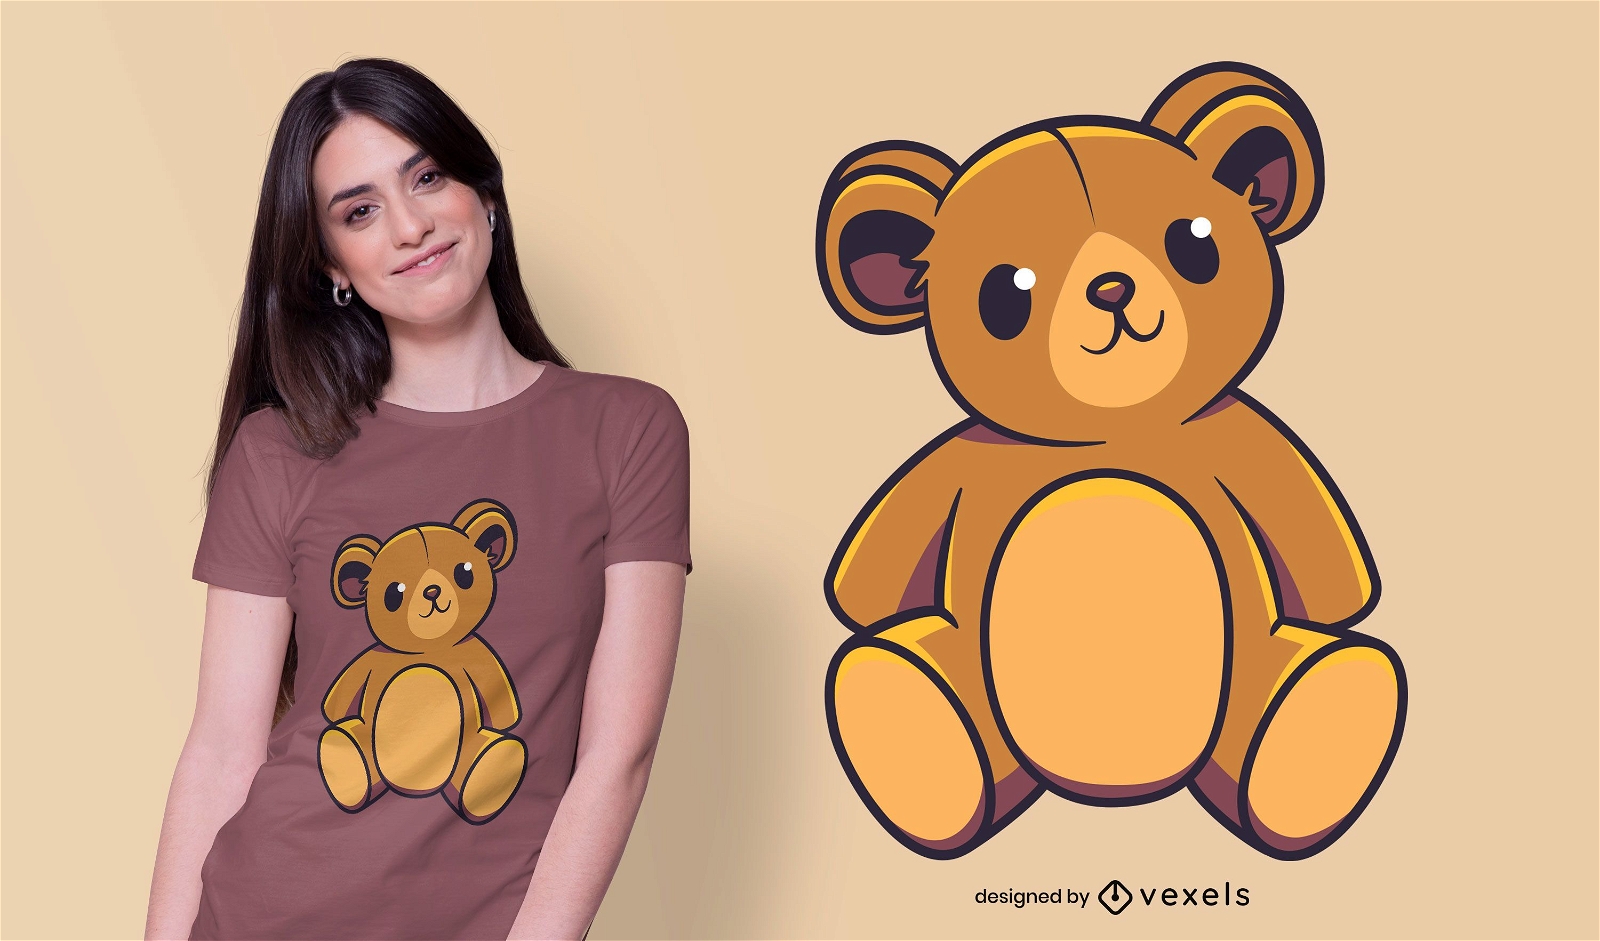 Cute teddy bear t-shirt design